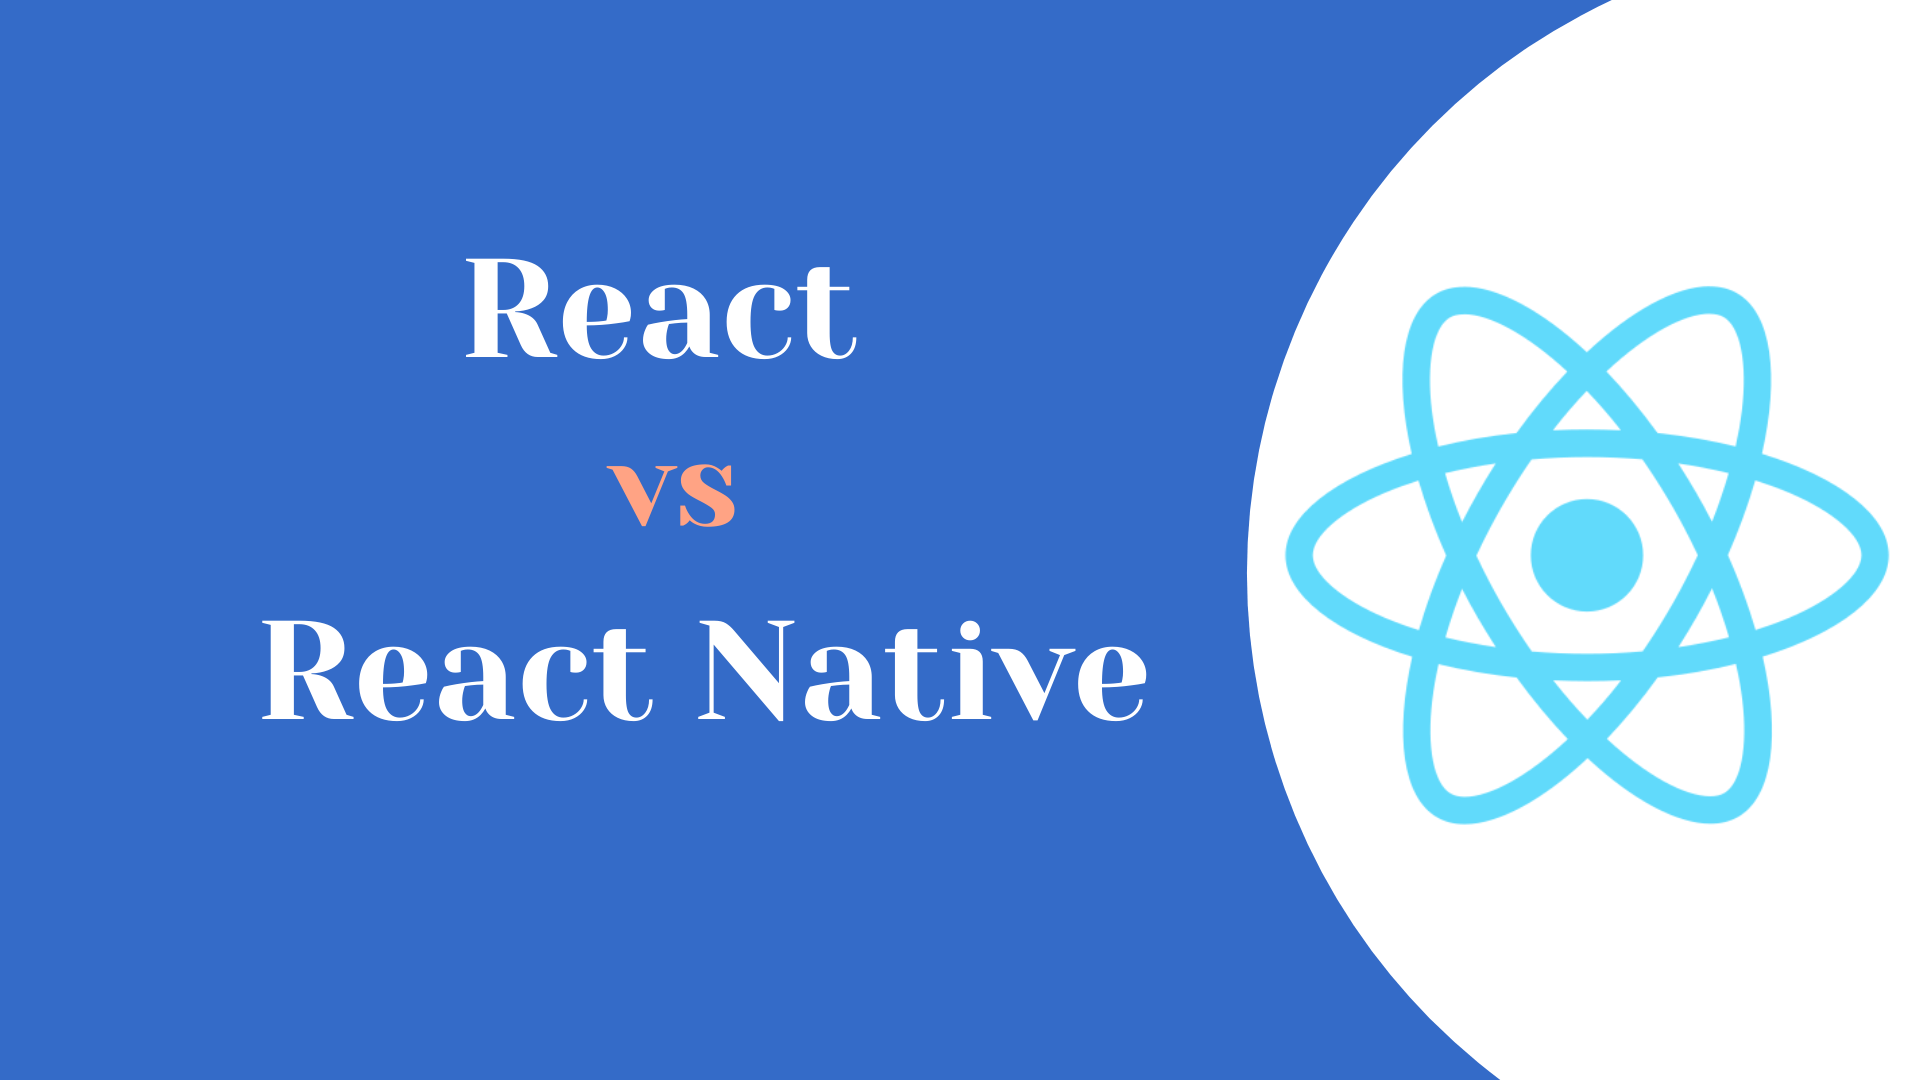 Reactjs vs React Native